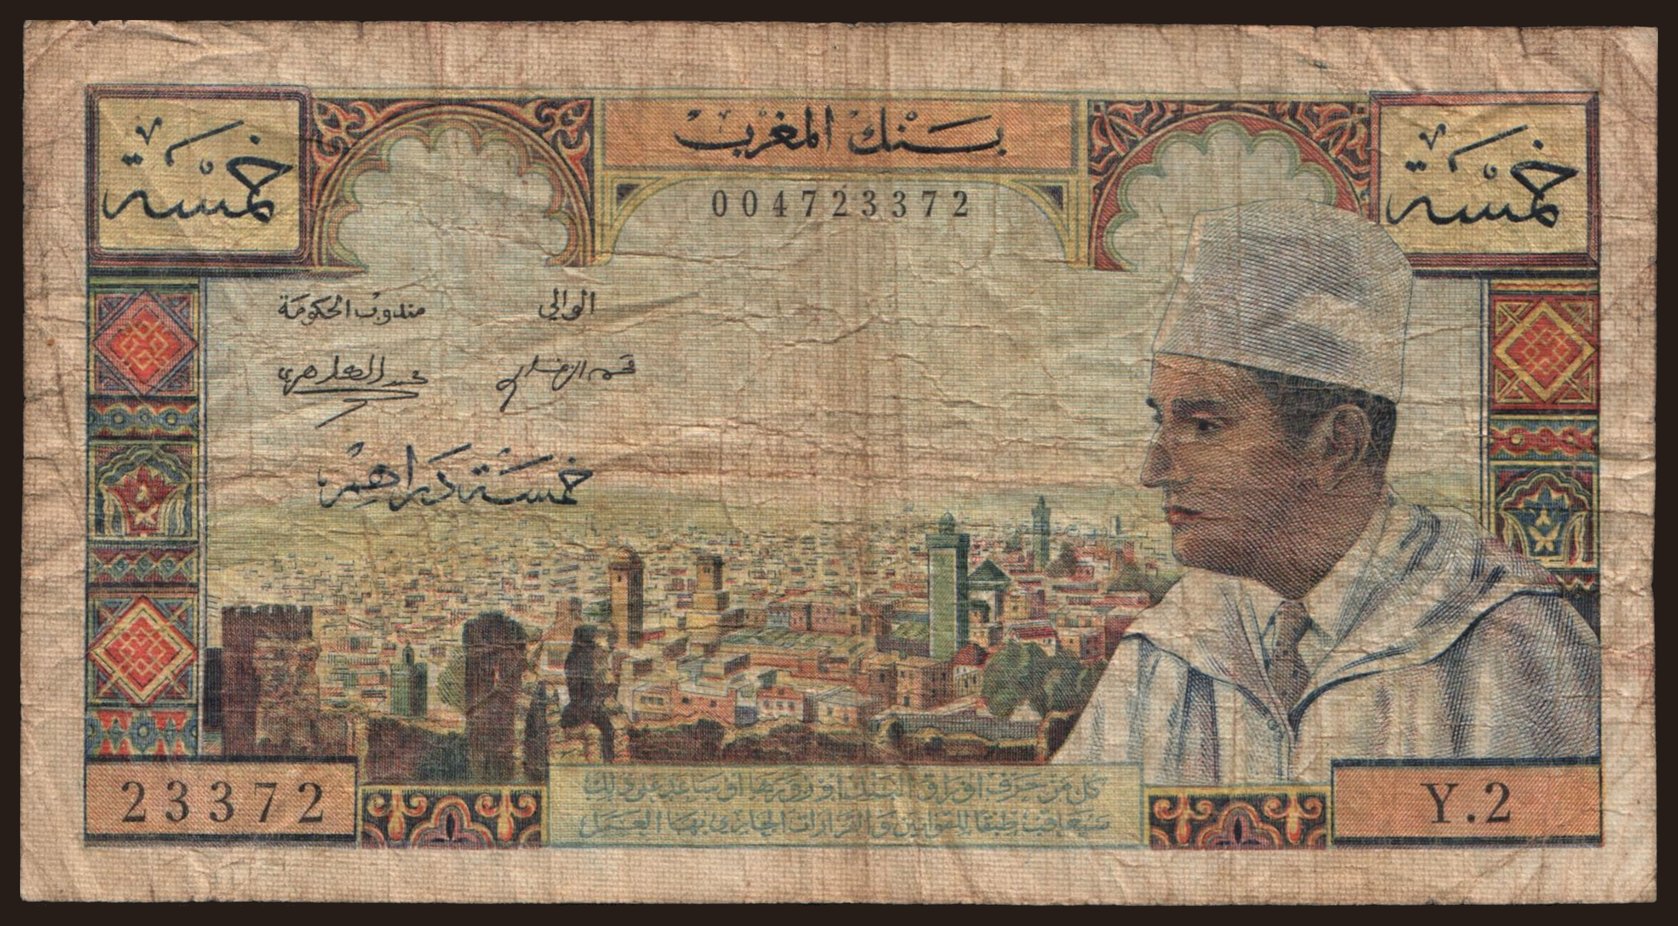 5 dirhams, 1960